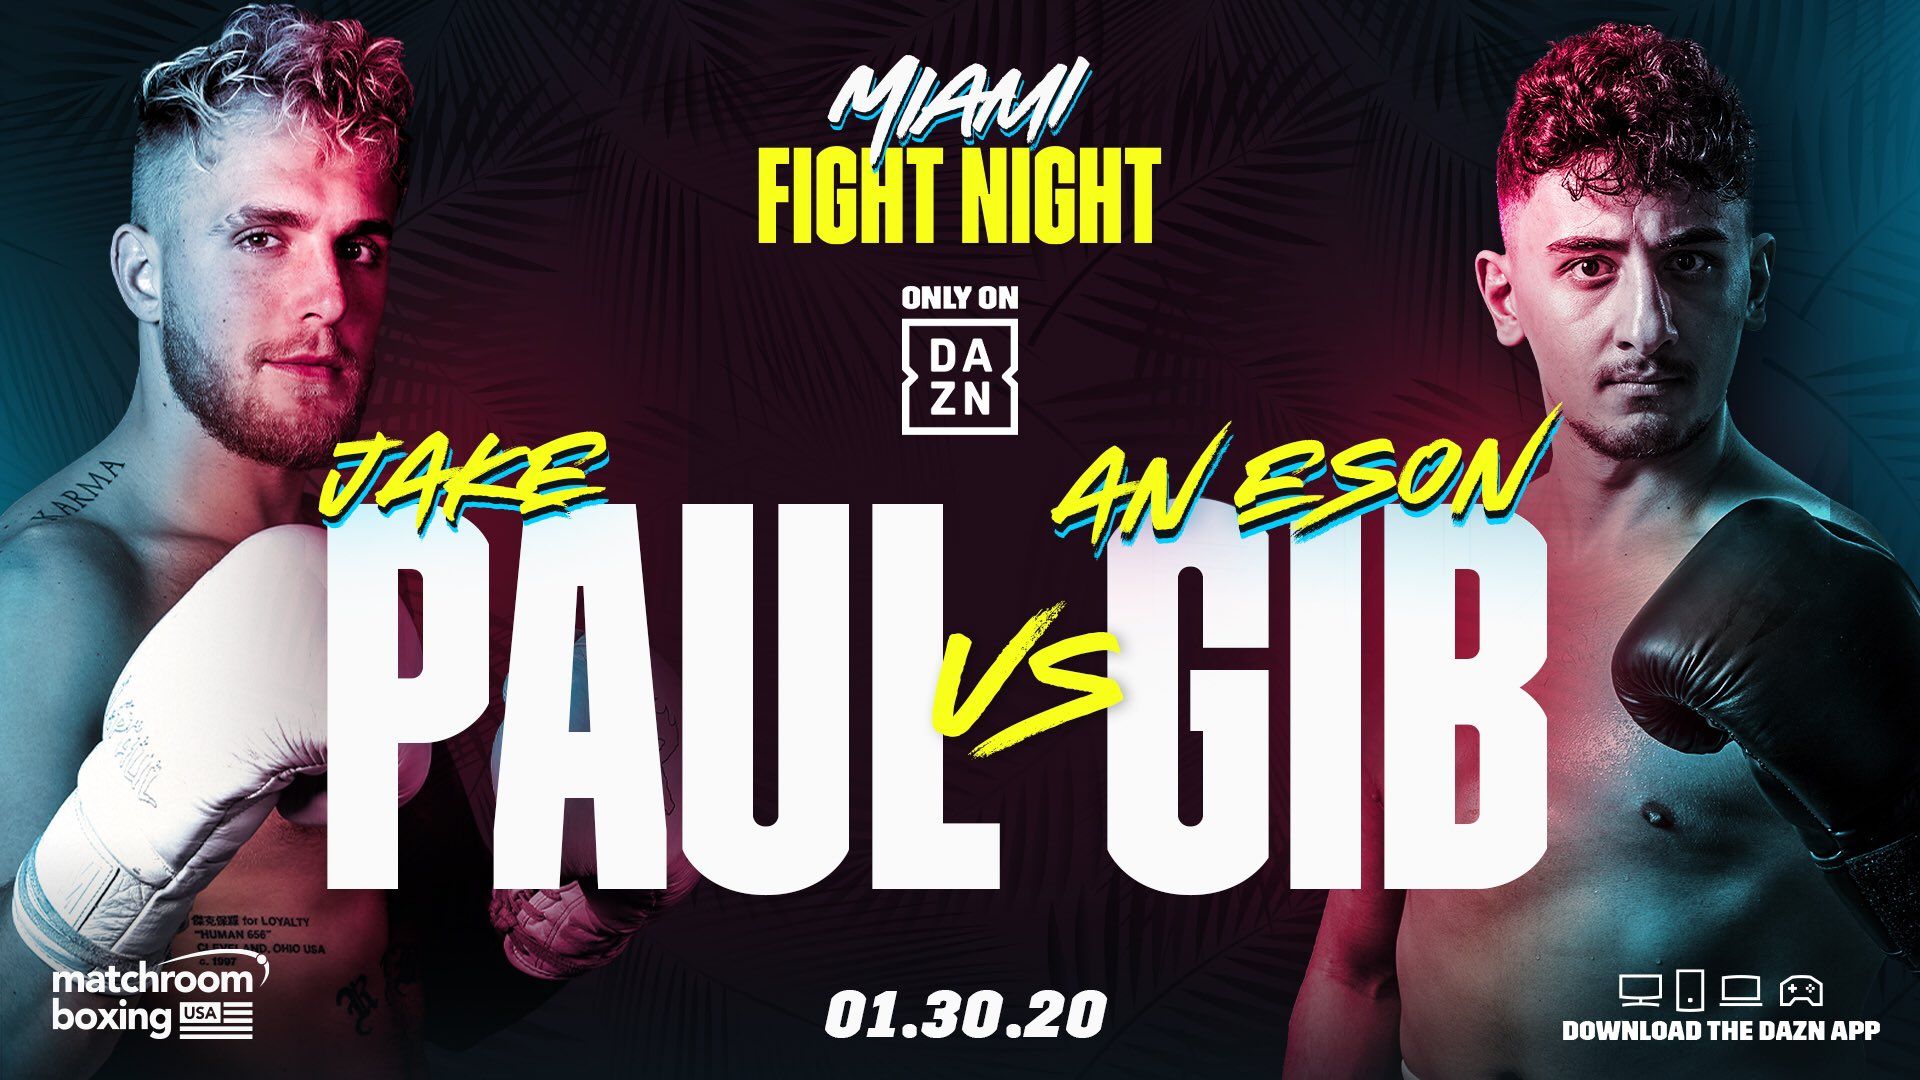 Miami Fight Night: Jake Paul vs AnEsonGib